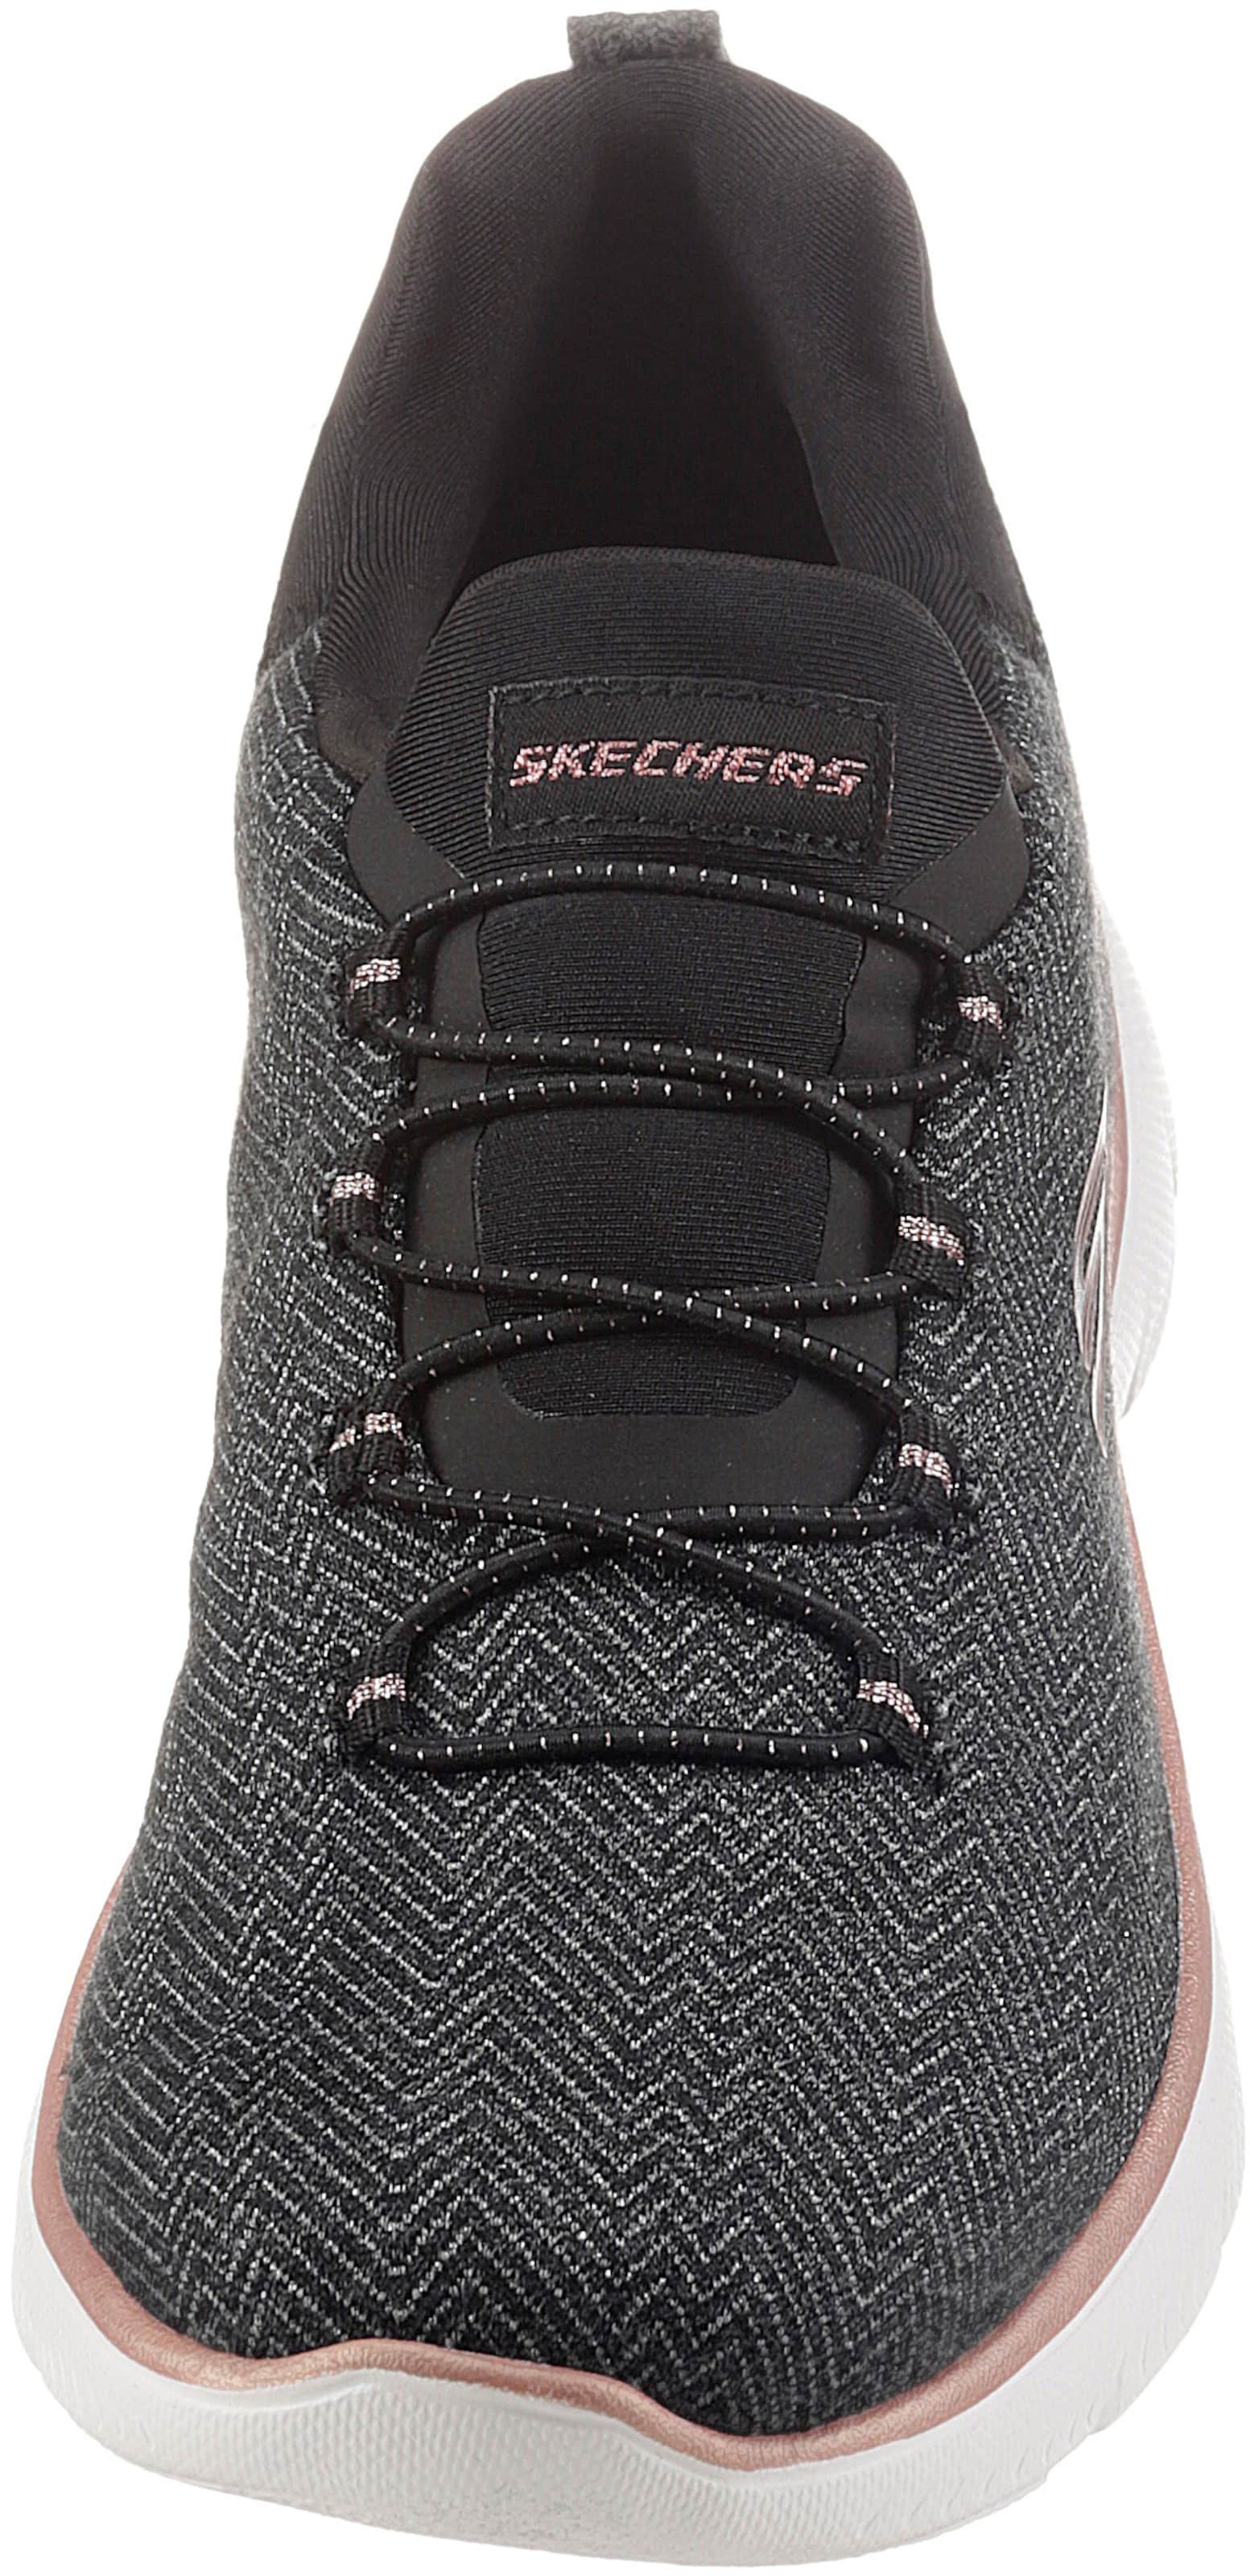 Skechers günstig Kaufen-Slip-On Sneaker in schwarz-meliert von Skechers. Slip-On Sneaker in schwarz-meliert von Skechers <![CDATA[Slipper, Skechers, Textil-Synthetik kombiniert]]>. 